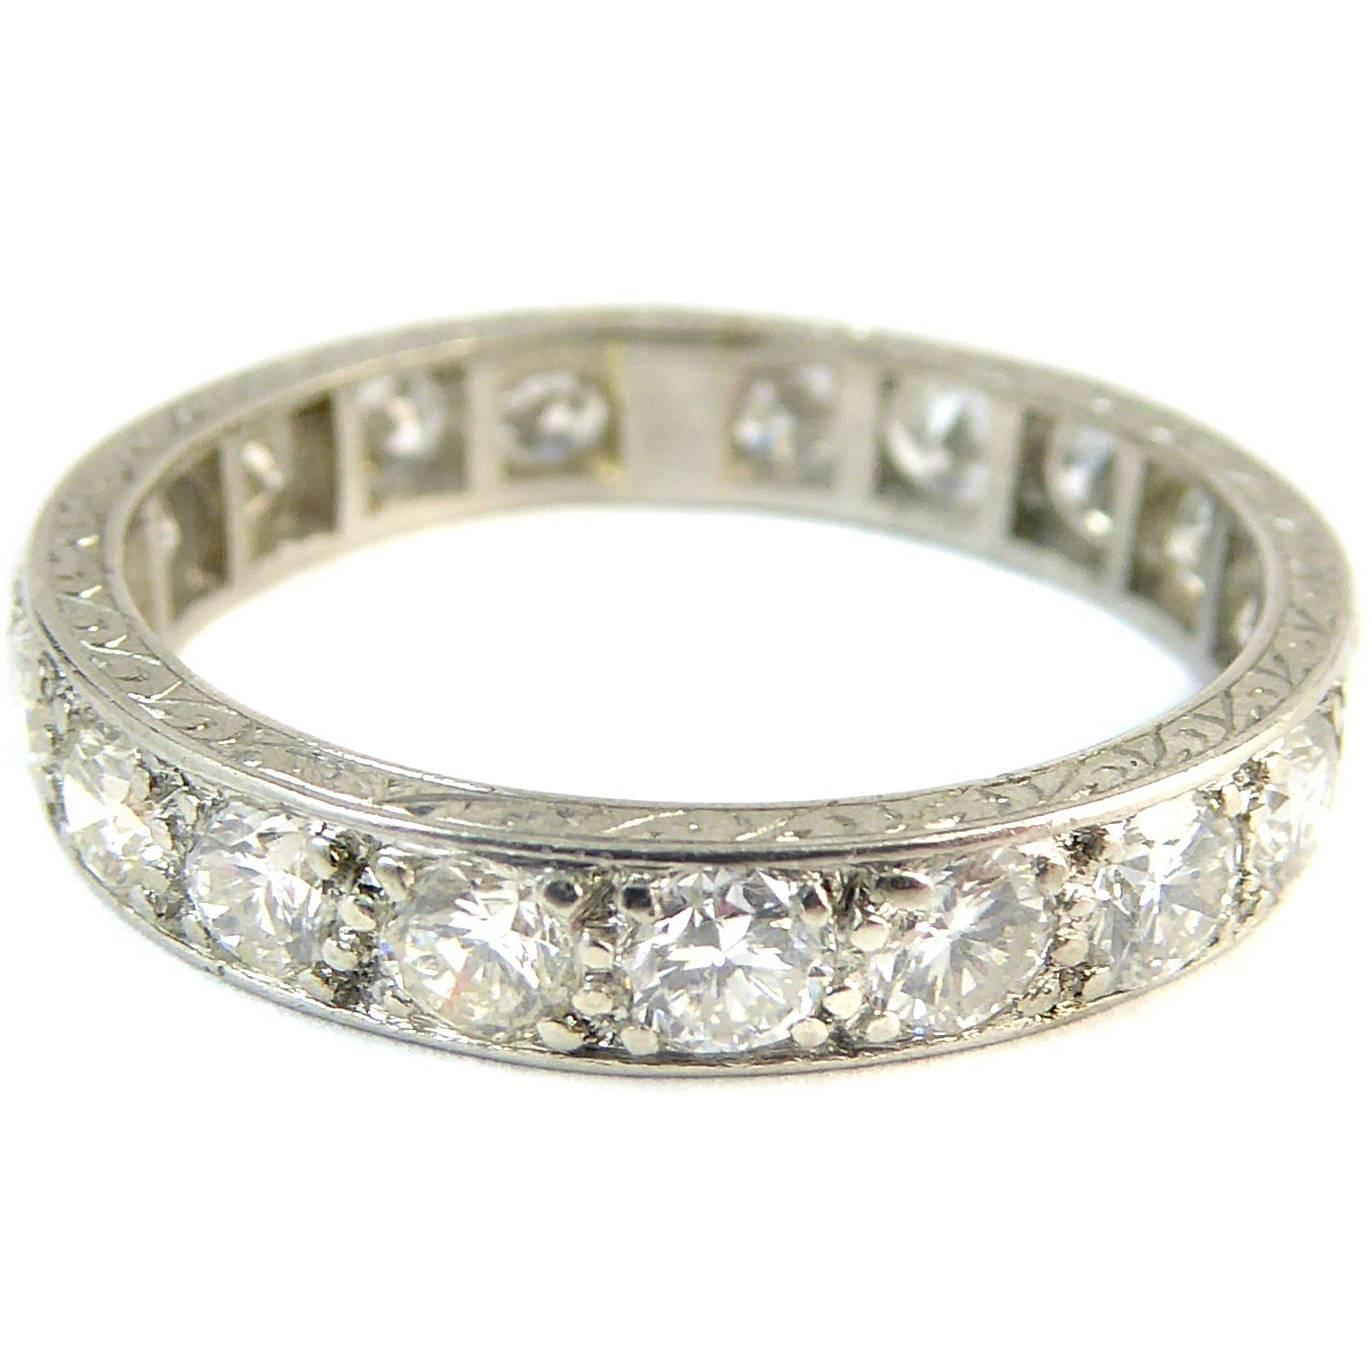 Vintage Diamond Eternity Ring, 1.54 Carat, circa 1930s Era